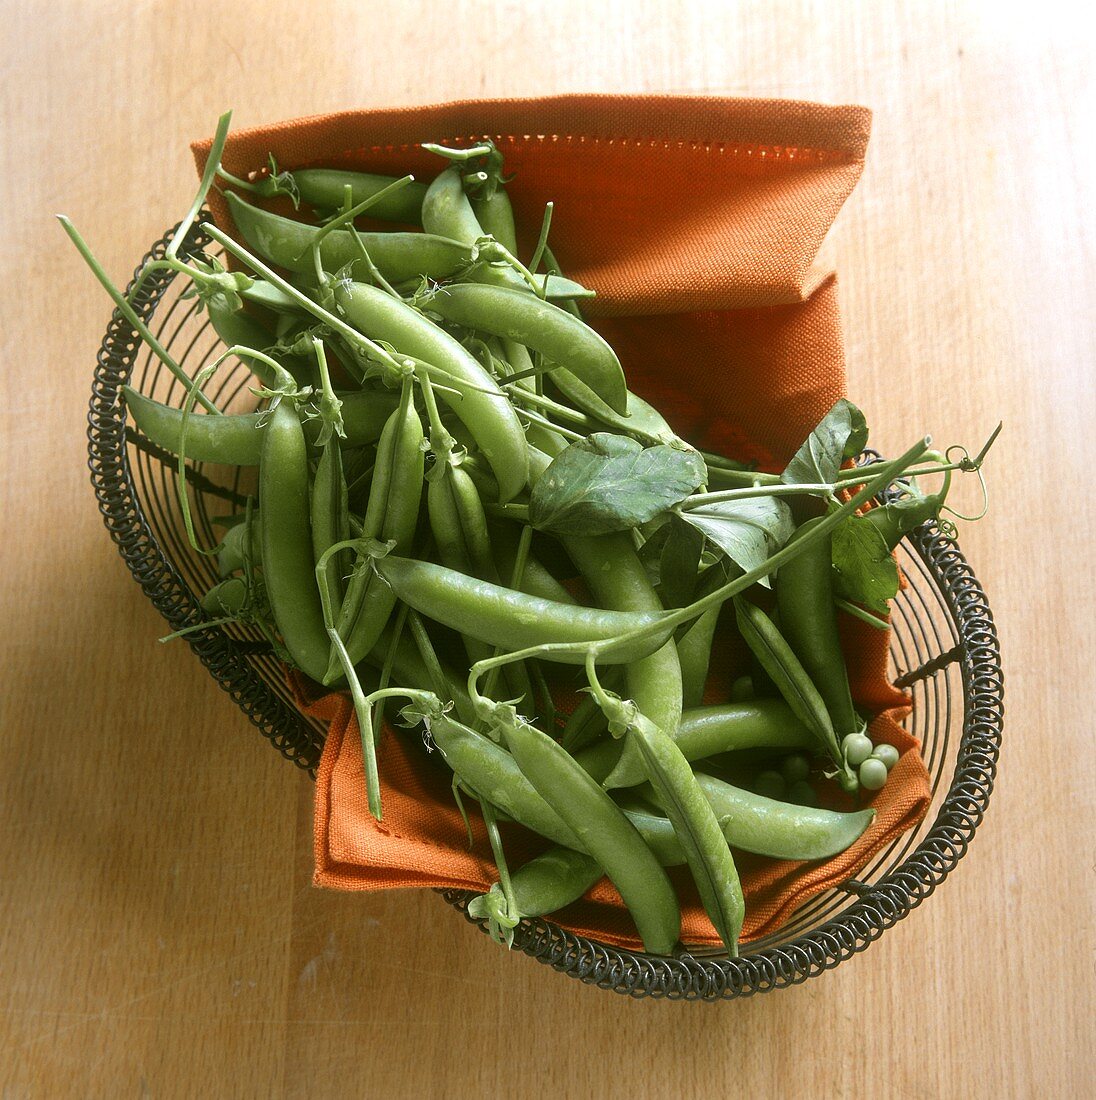 Pea pods (marrowfat peas) in wire basket